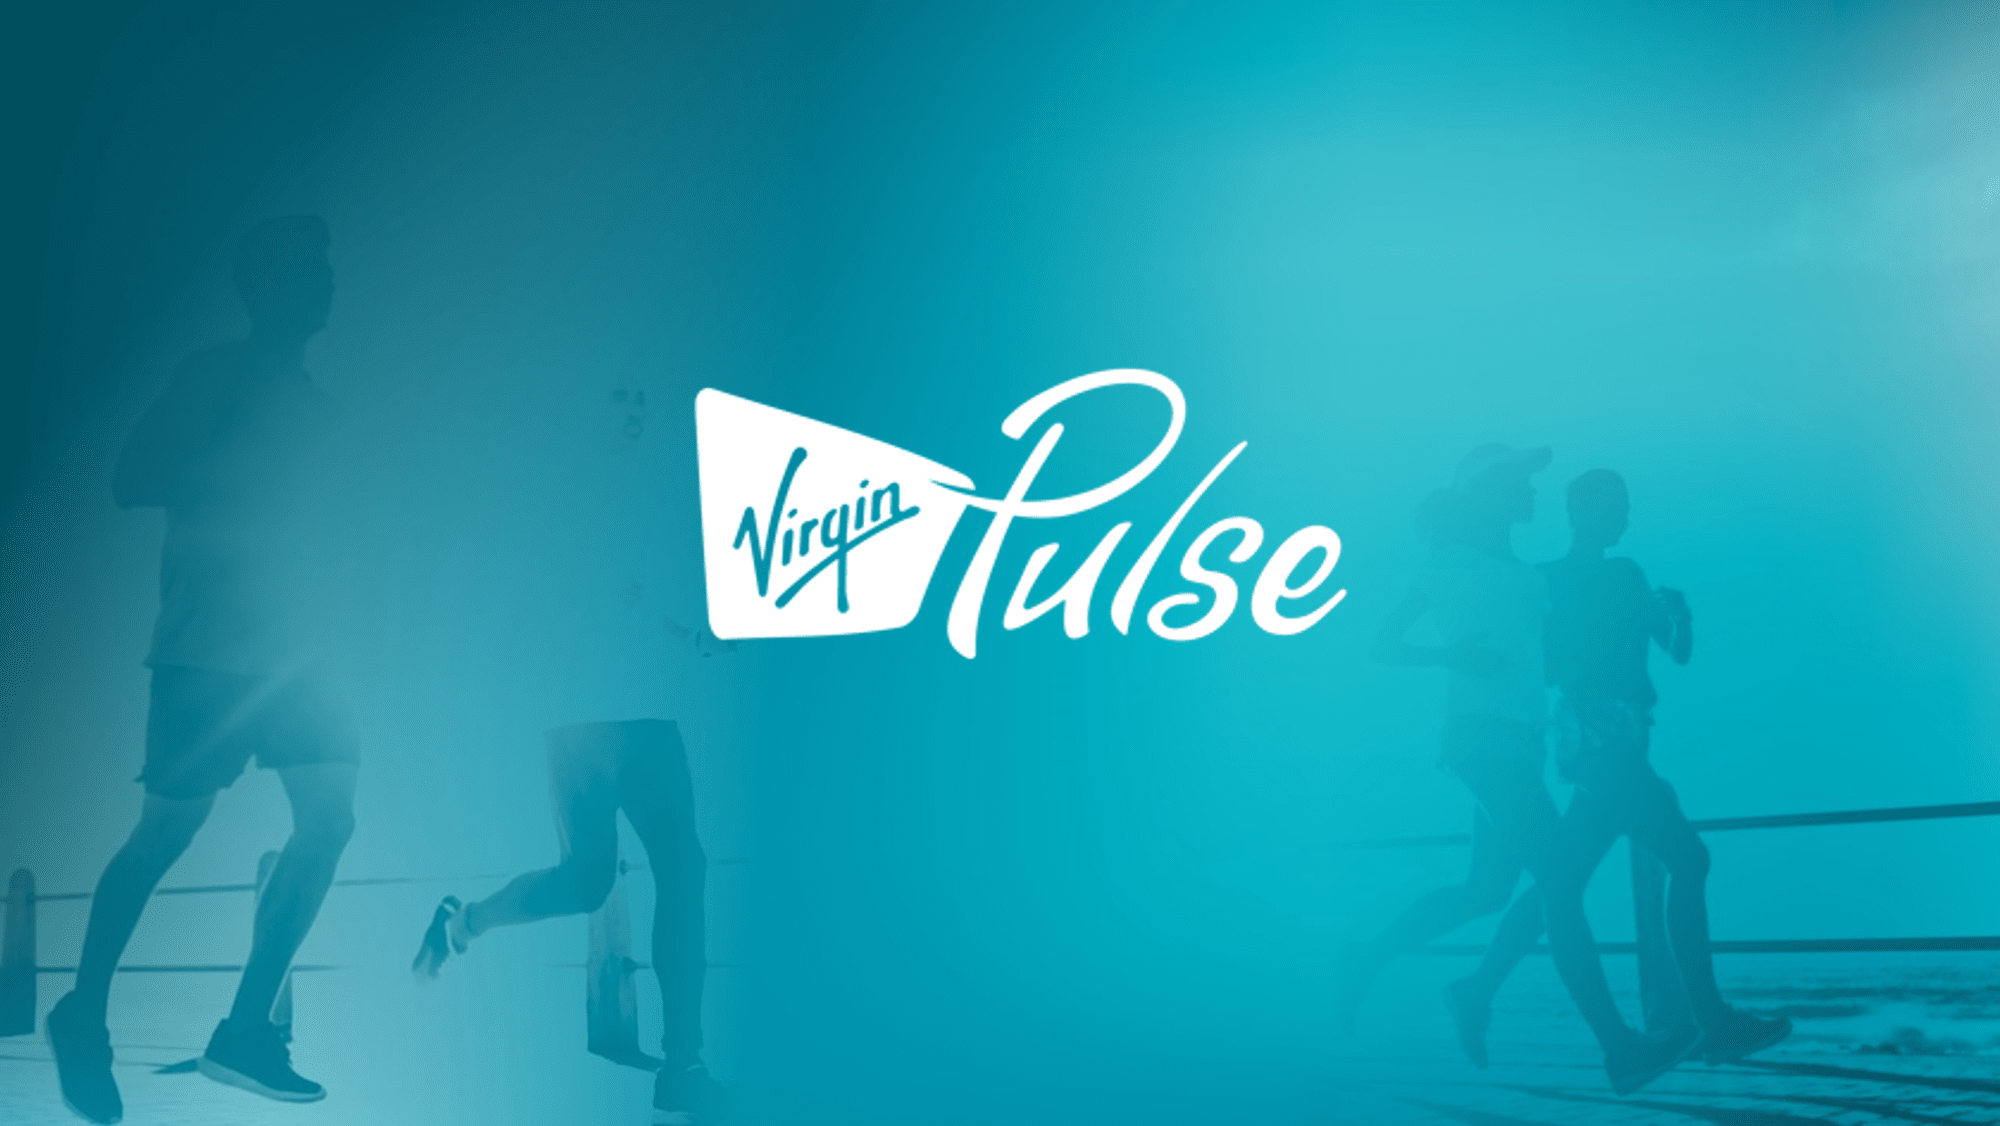 virgin pulse login website